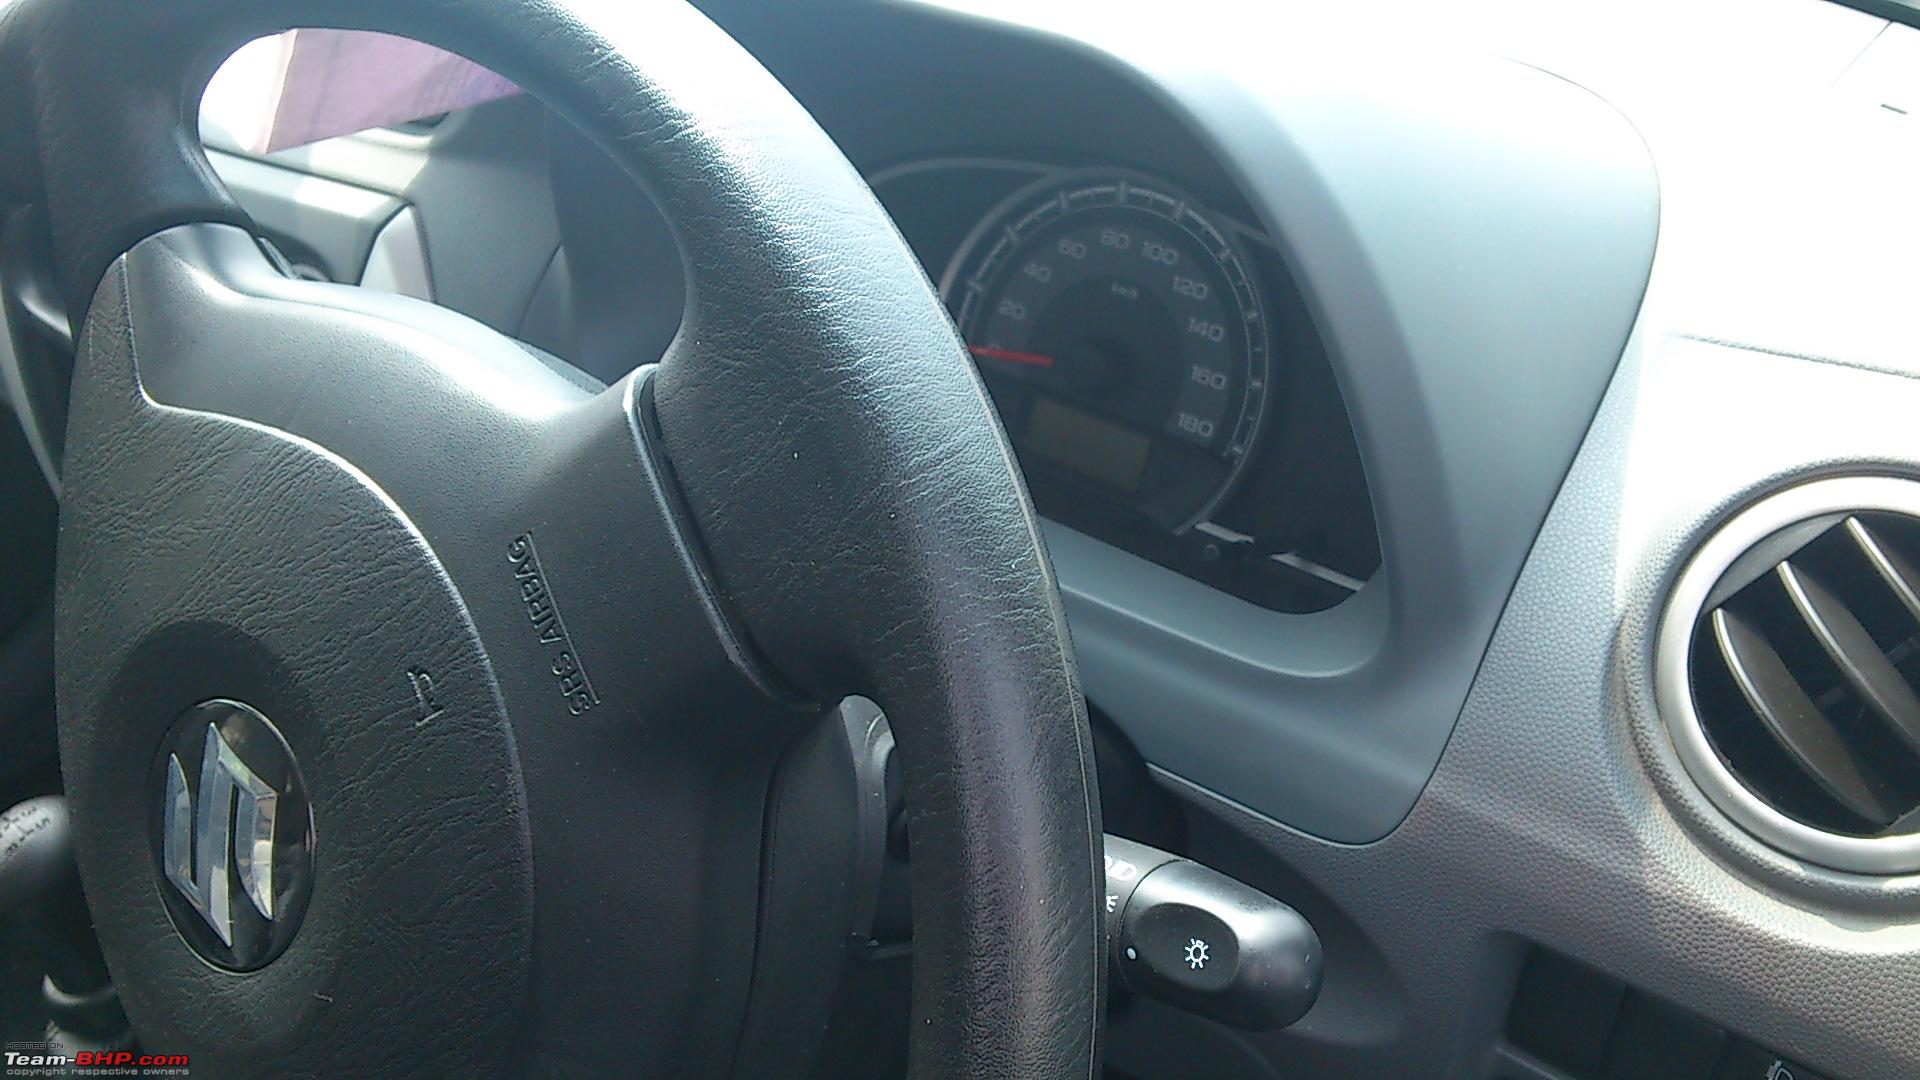 New_Alto_800_airbag